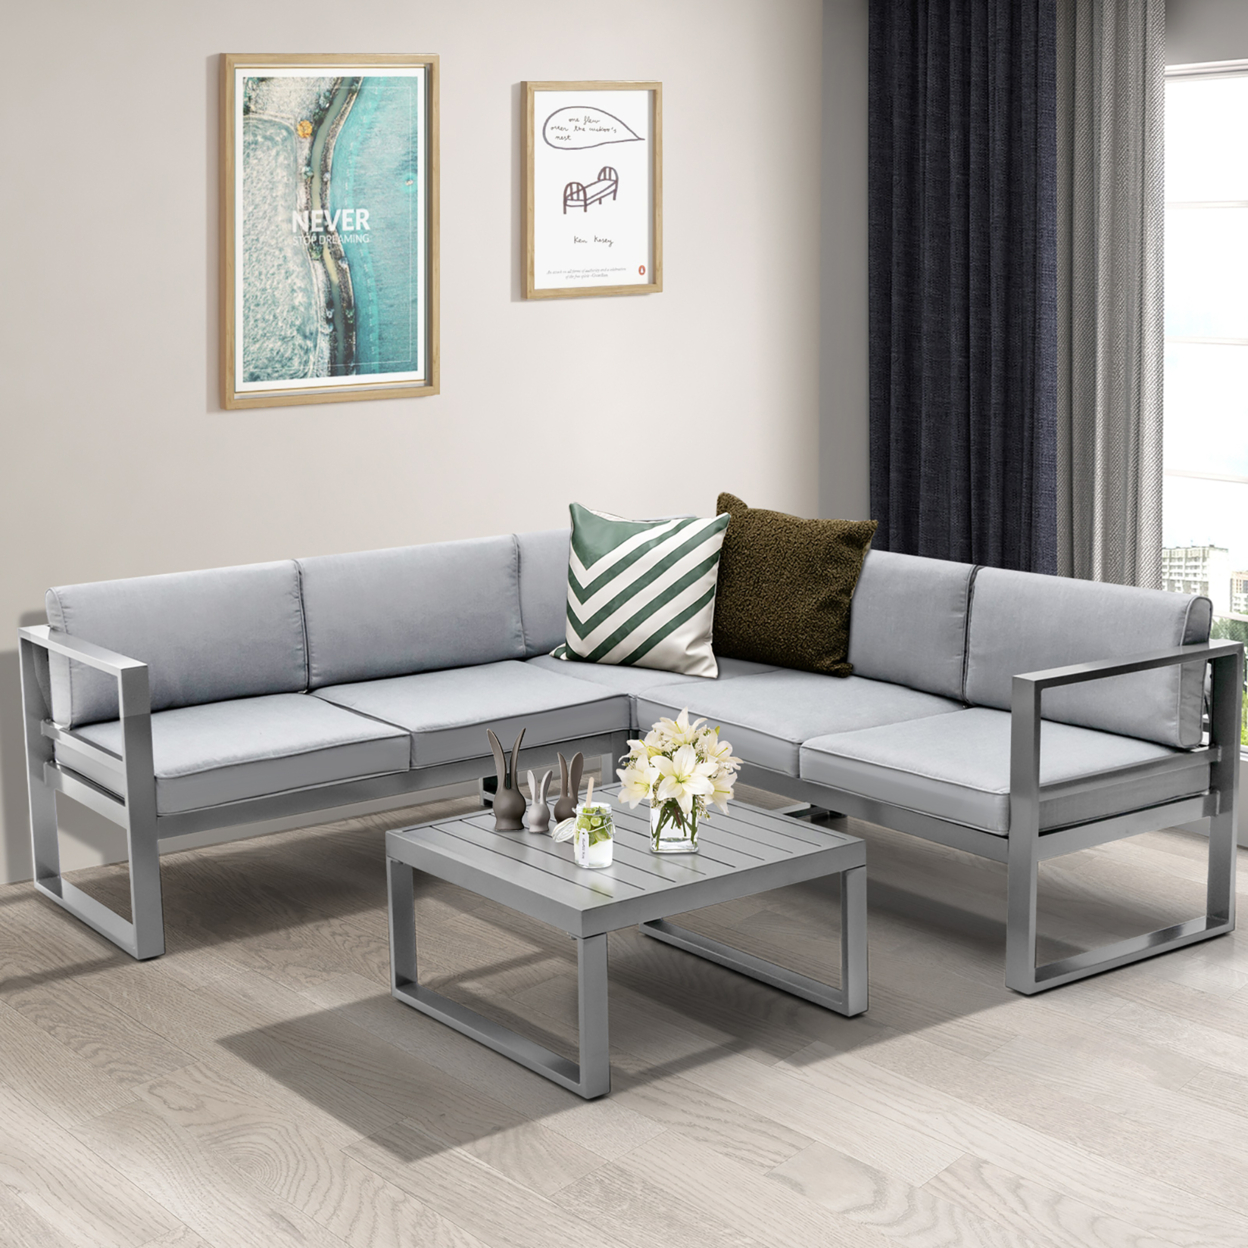 4PCS Aluminum Outdoor Conversation Set Patio Furniture Set W/ Coffee Table & Cushions Gray